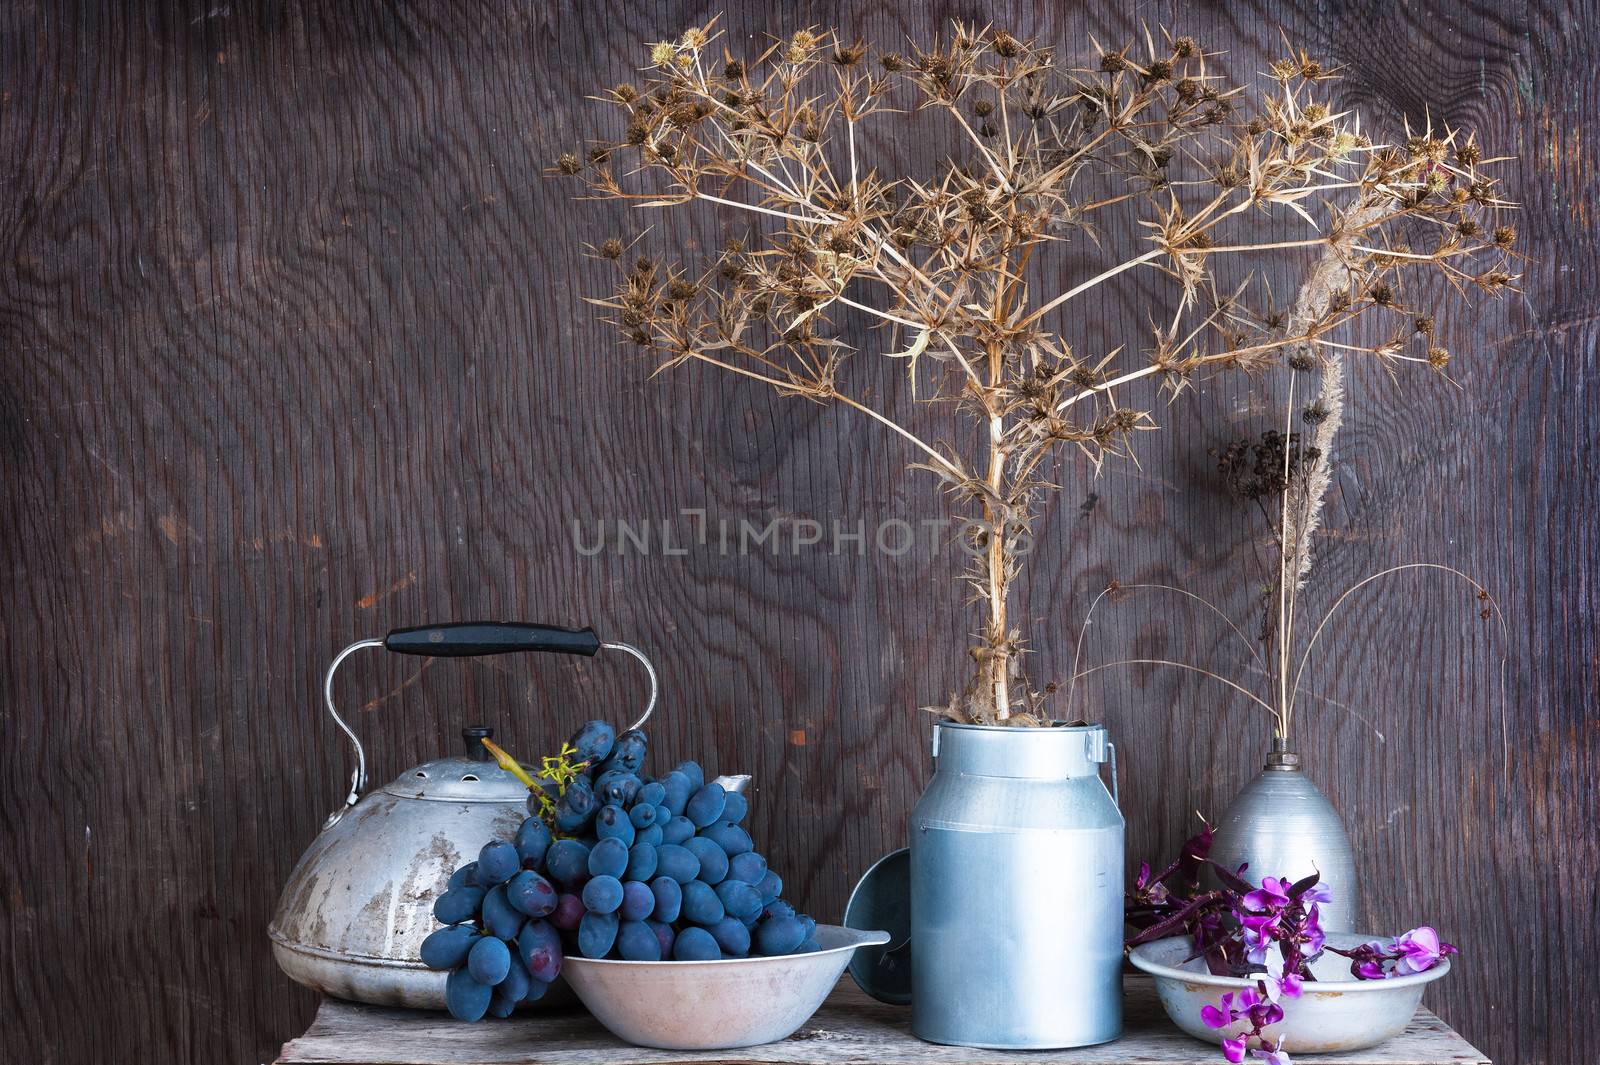 Kitchen utensils on the wooden background with dry autumn prairie flowers